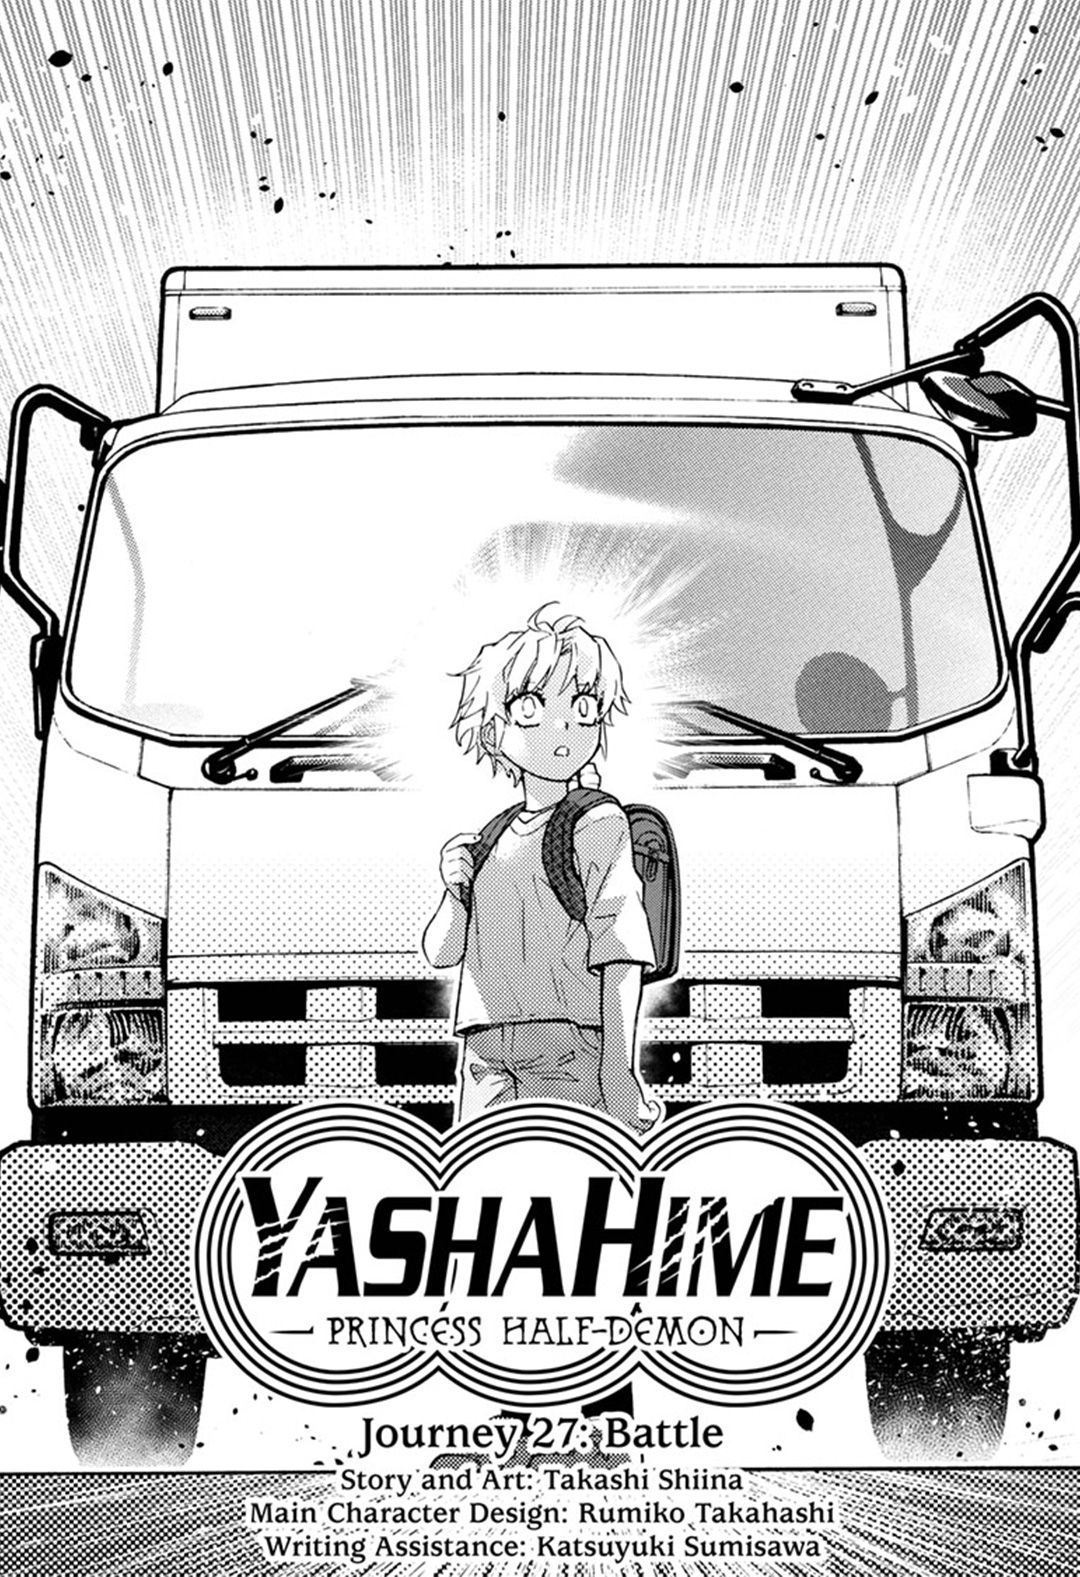 VIZ  Read Yashahime: Princess Half-Demon, Chapter 23 - Explore